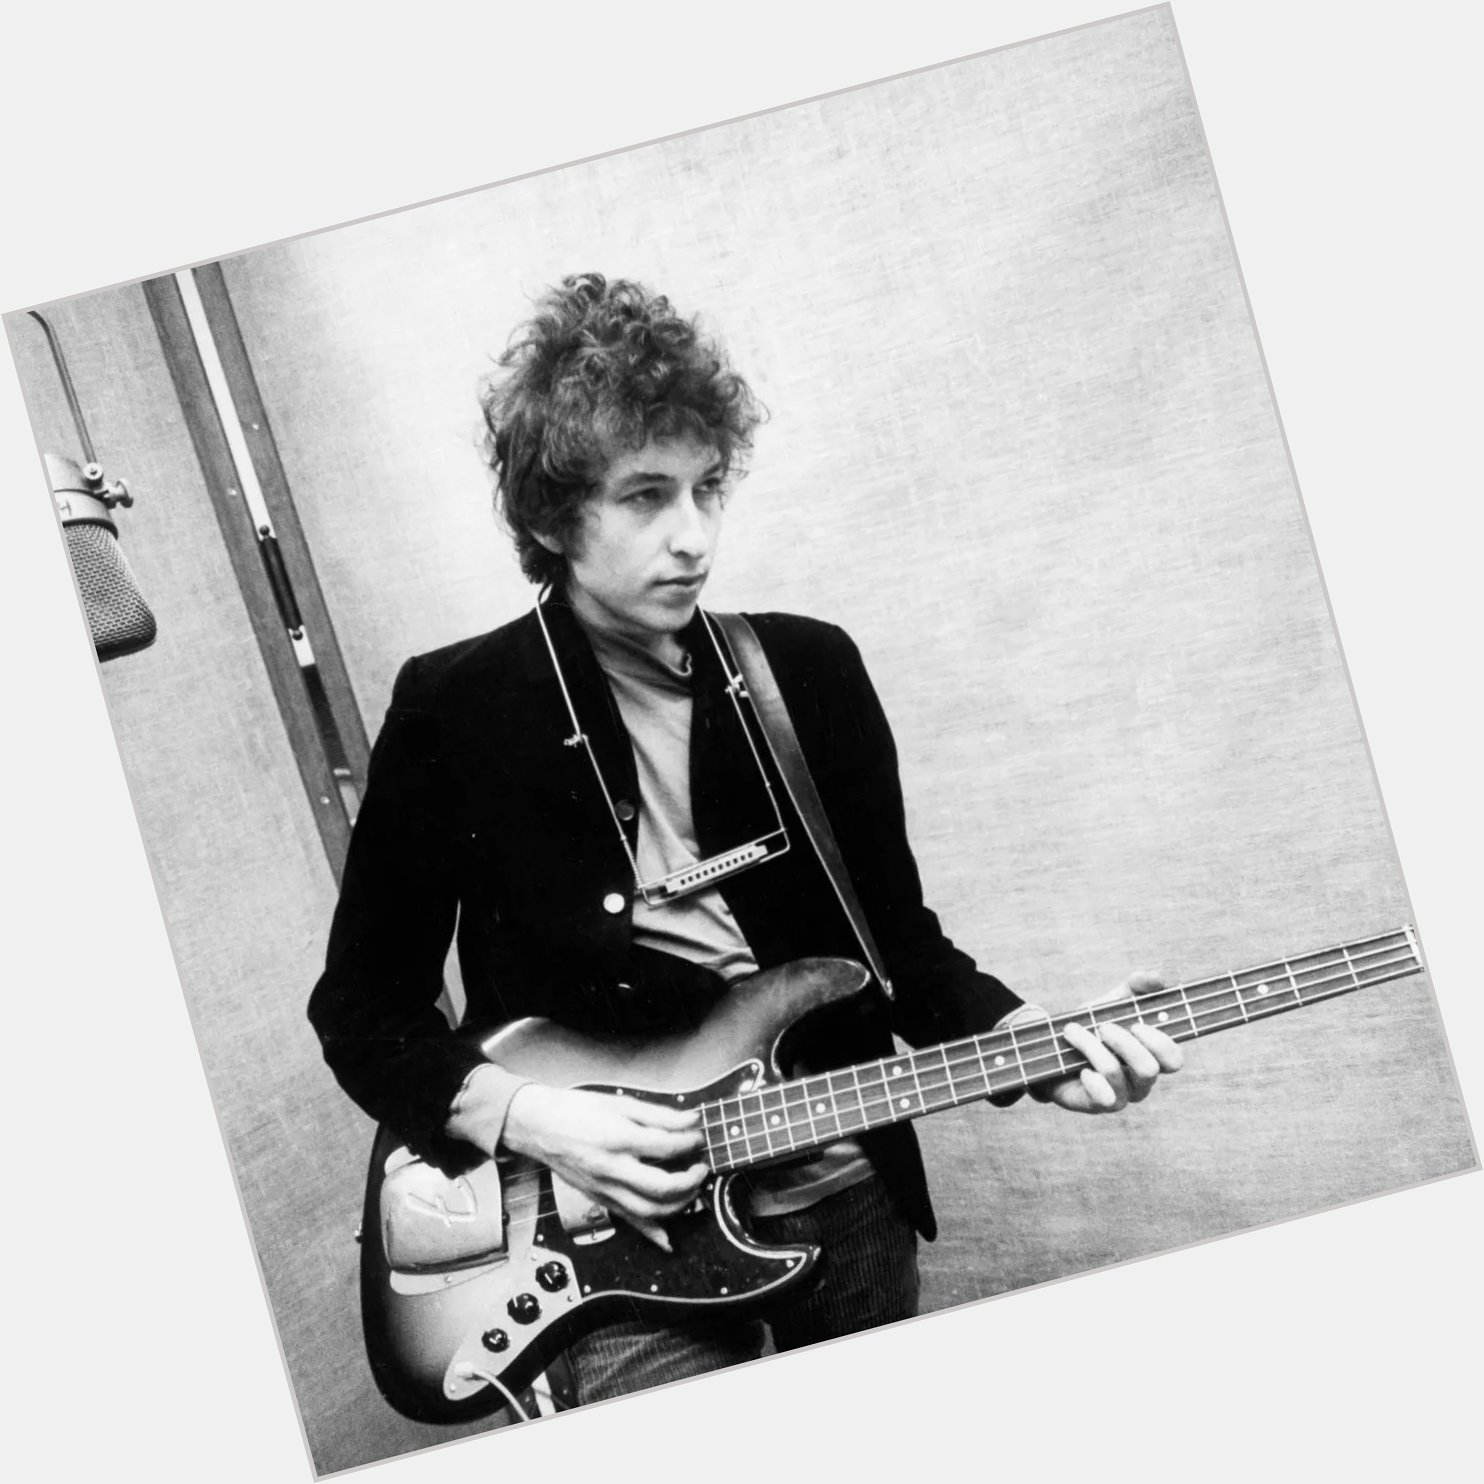 Happy birthday, Bob Dylan. 

Legend. 